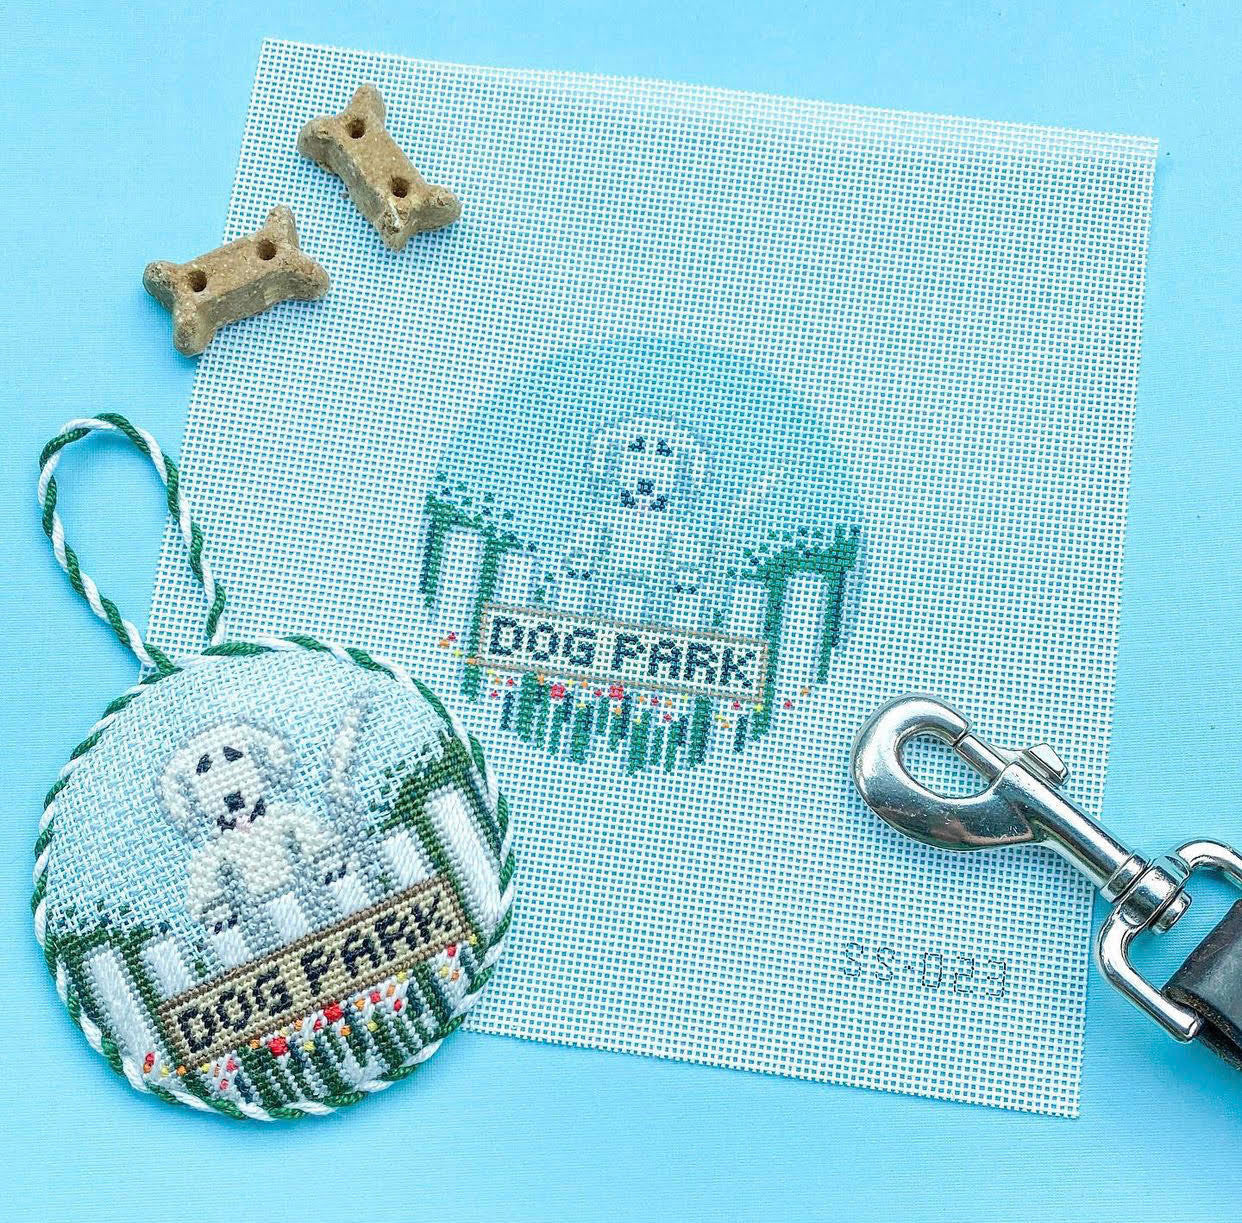 Stitch Style Dog Park - White Dog SS-023 with Stitch Guide